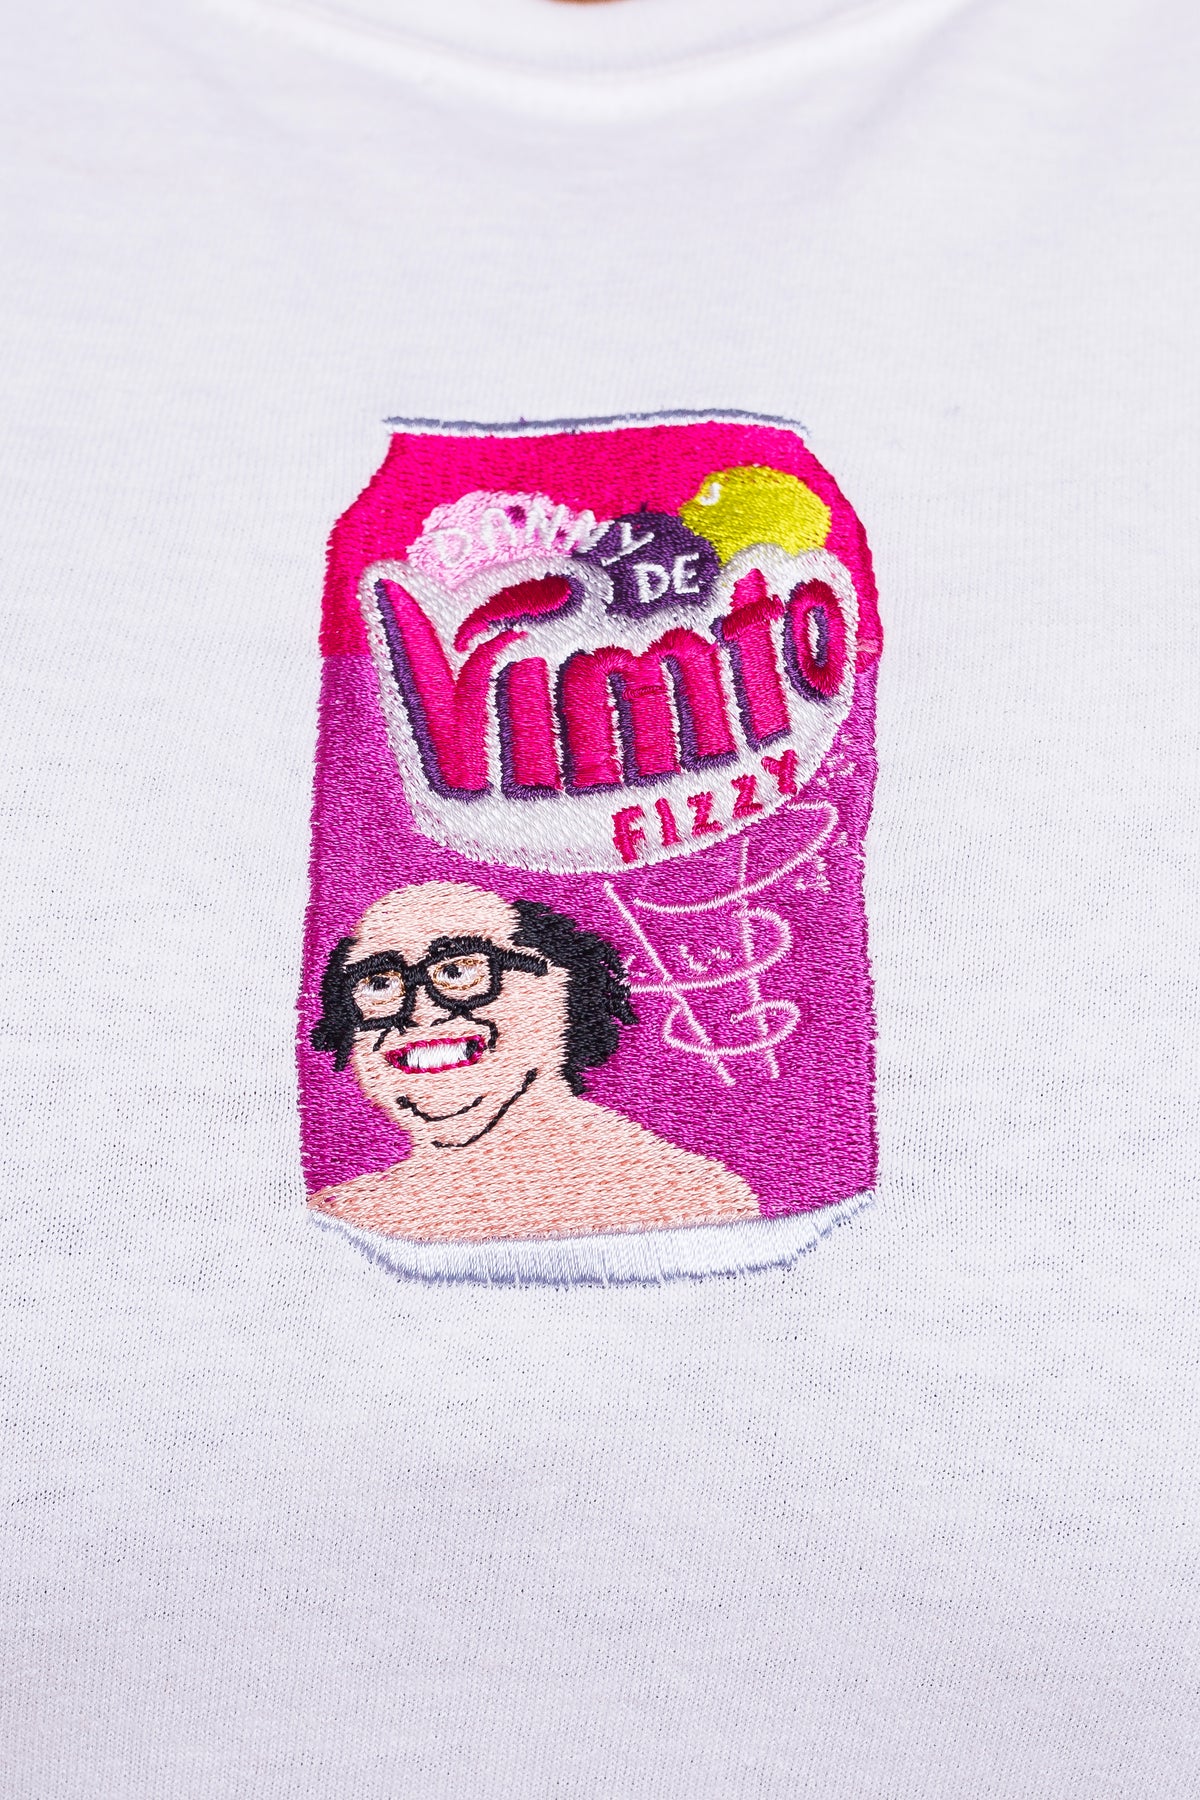 Danny DeVimto Embroidered T-Shirt